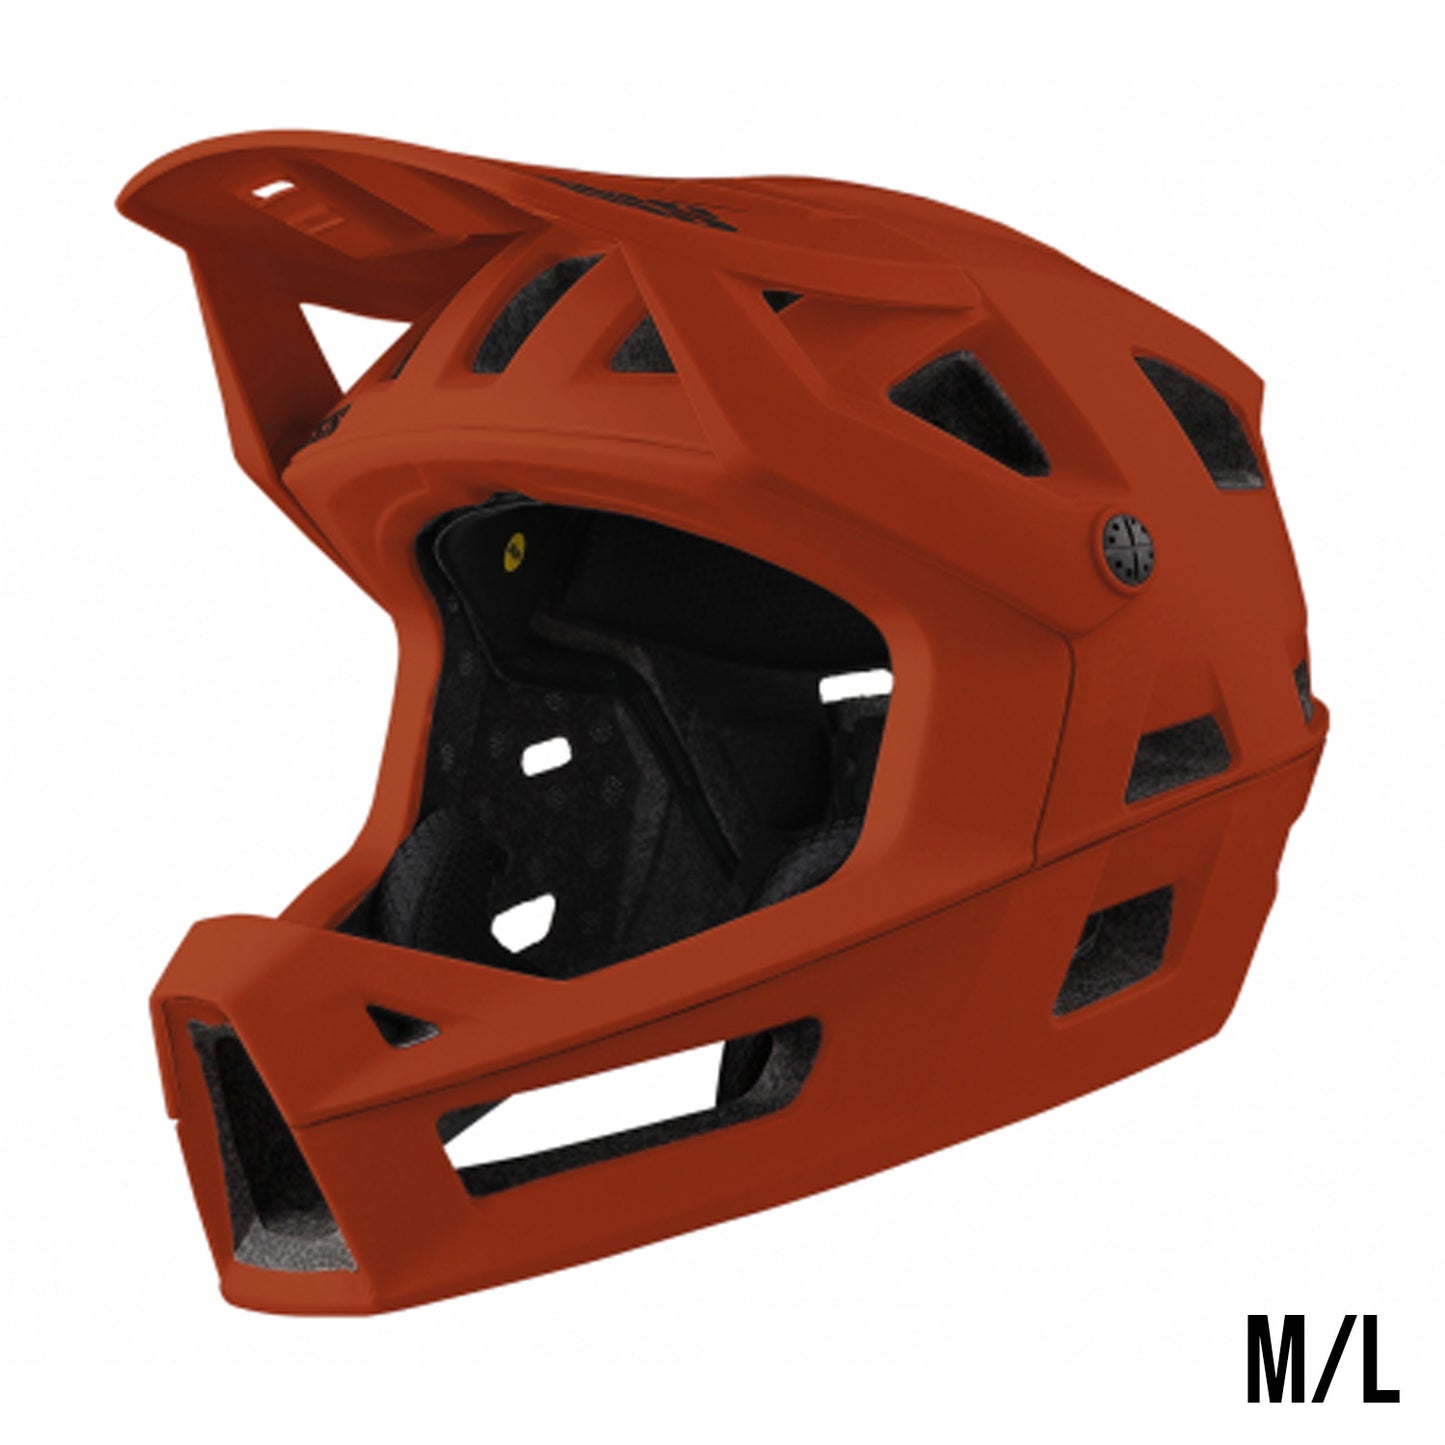 IXS Trigger FF MIPS Full Face MTB Helmet - Orange